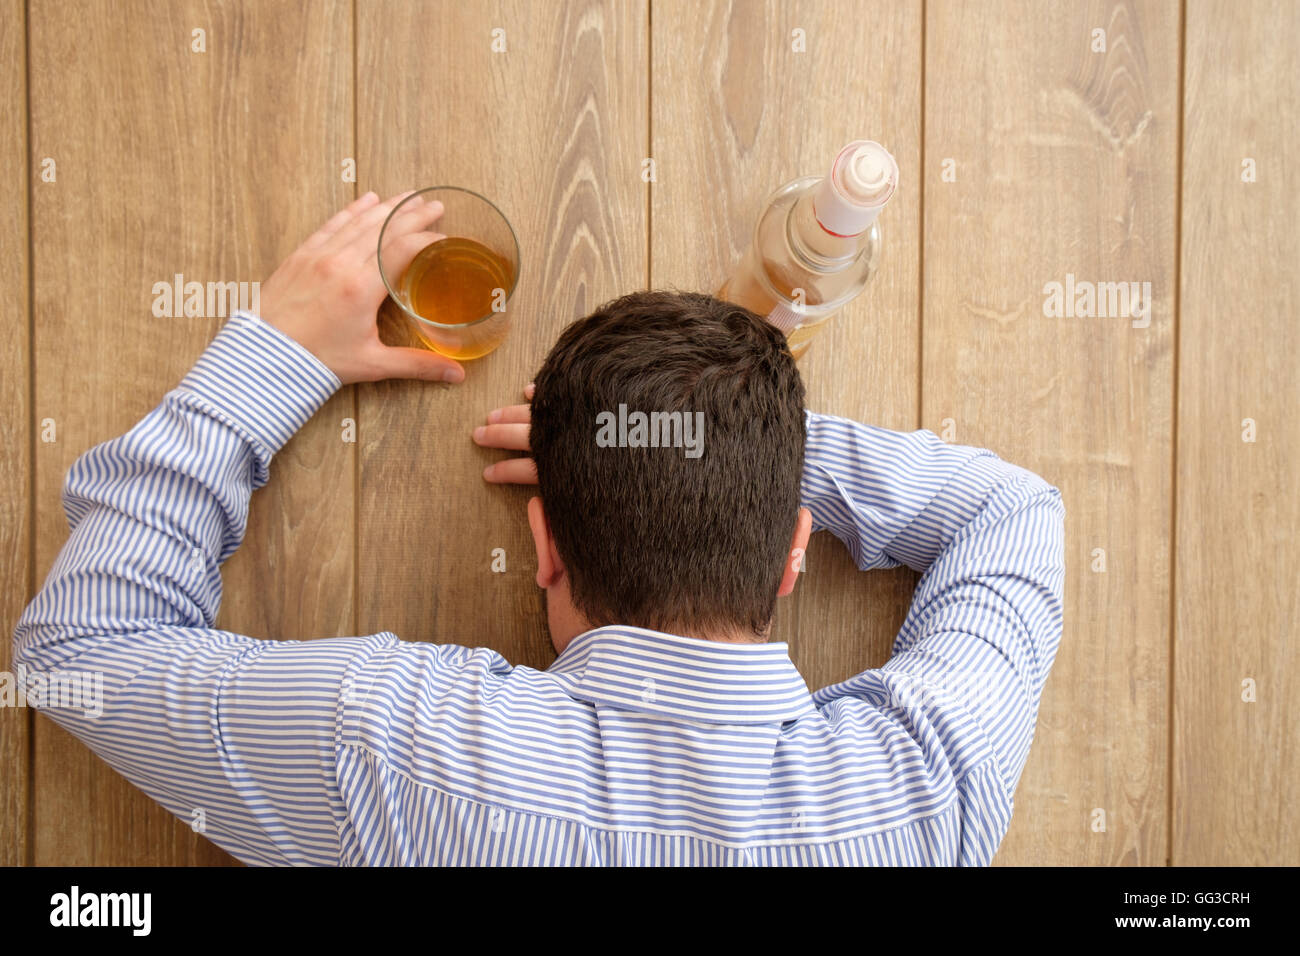 Man alcohol addicted feeling bad Stock Photo